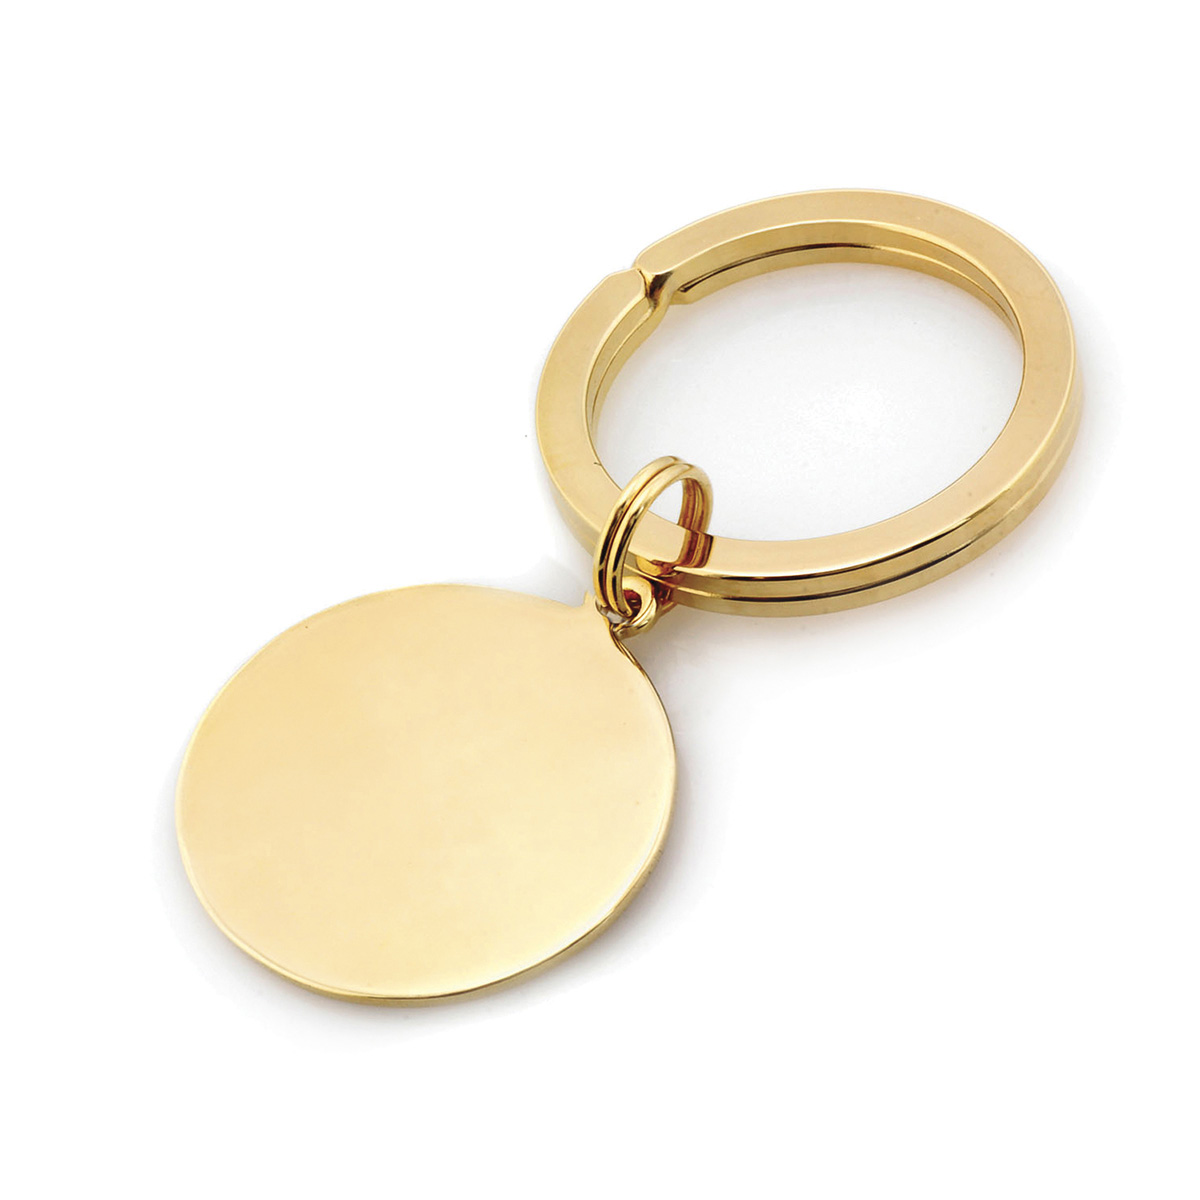 Monogram Bangle Bracelet - Classic Oval Bead Border Gold Plated